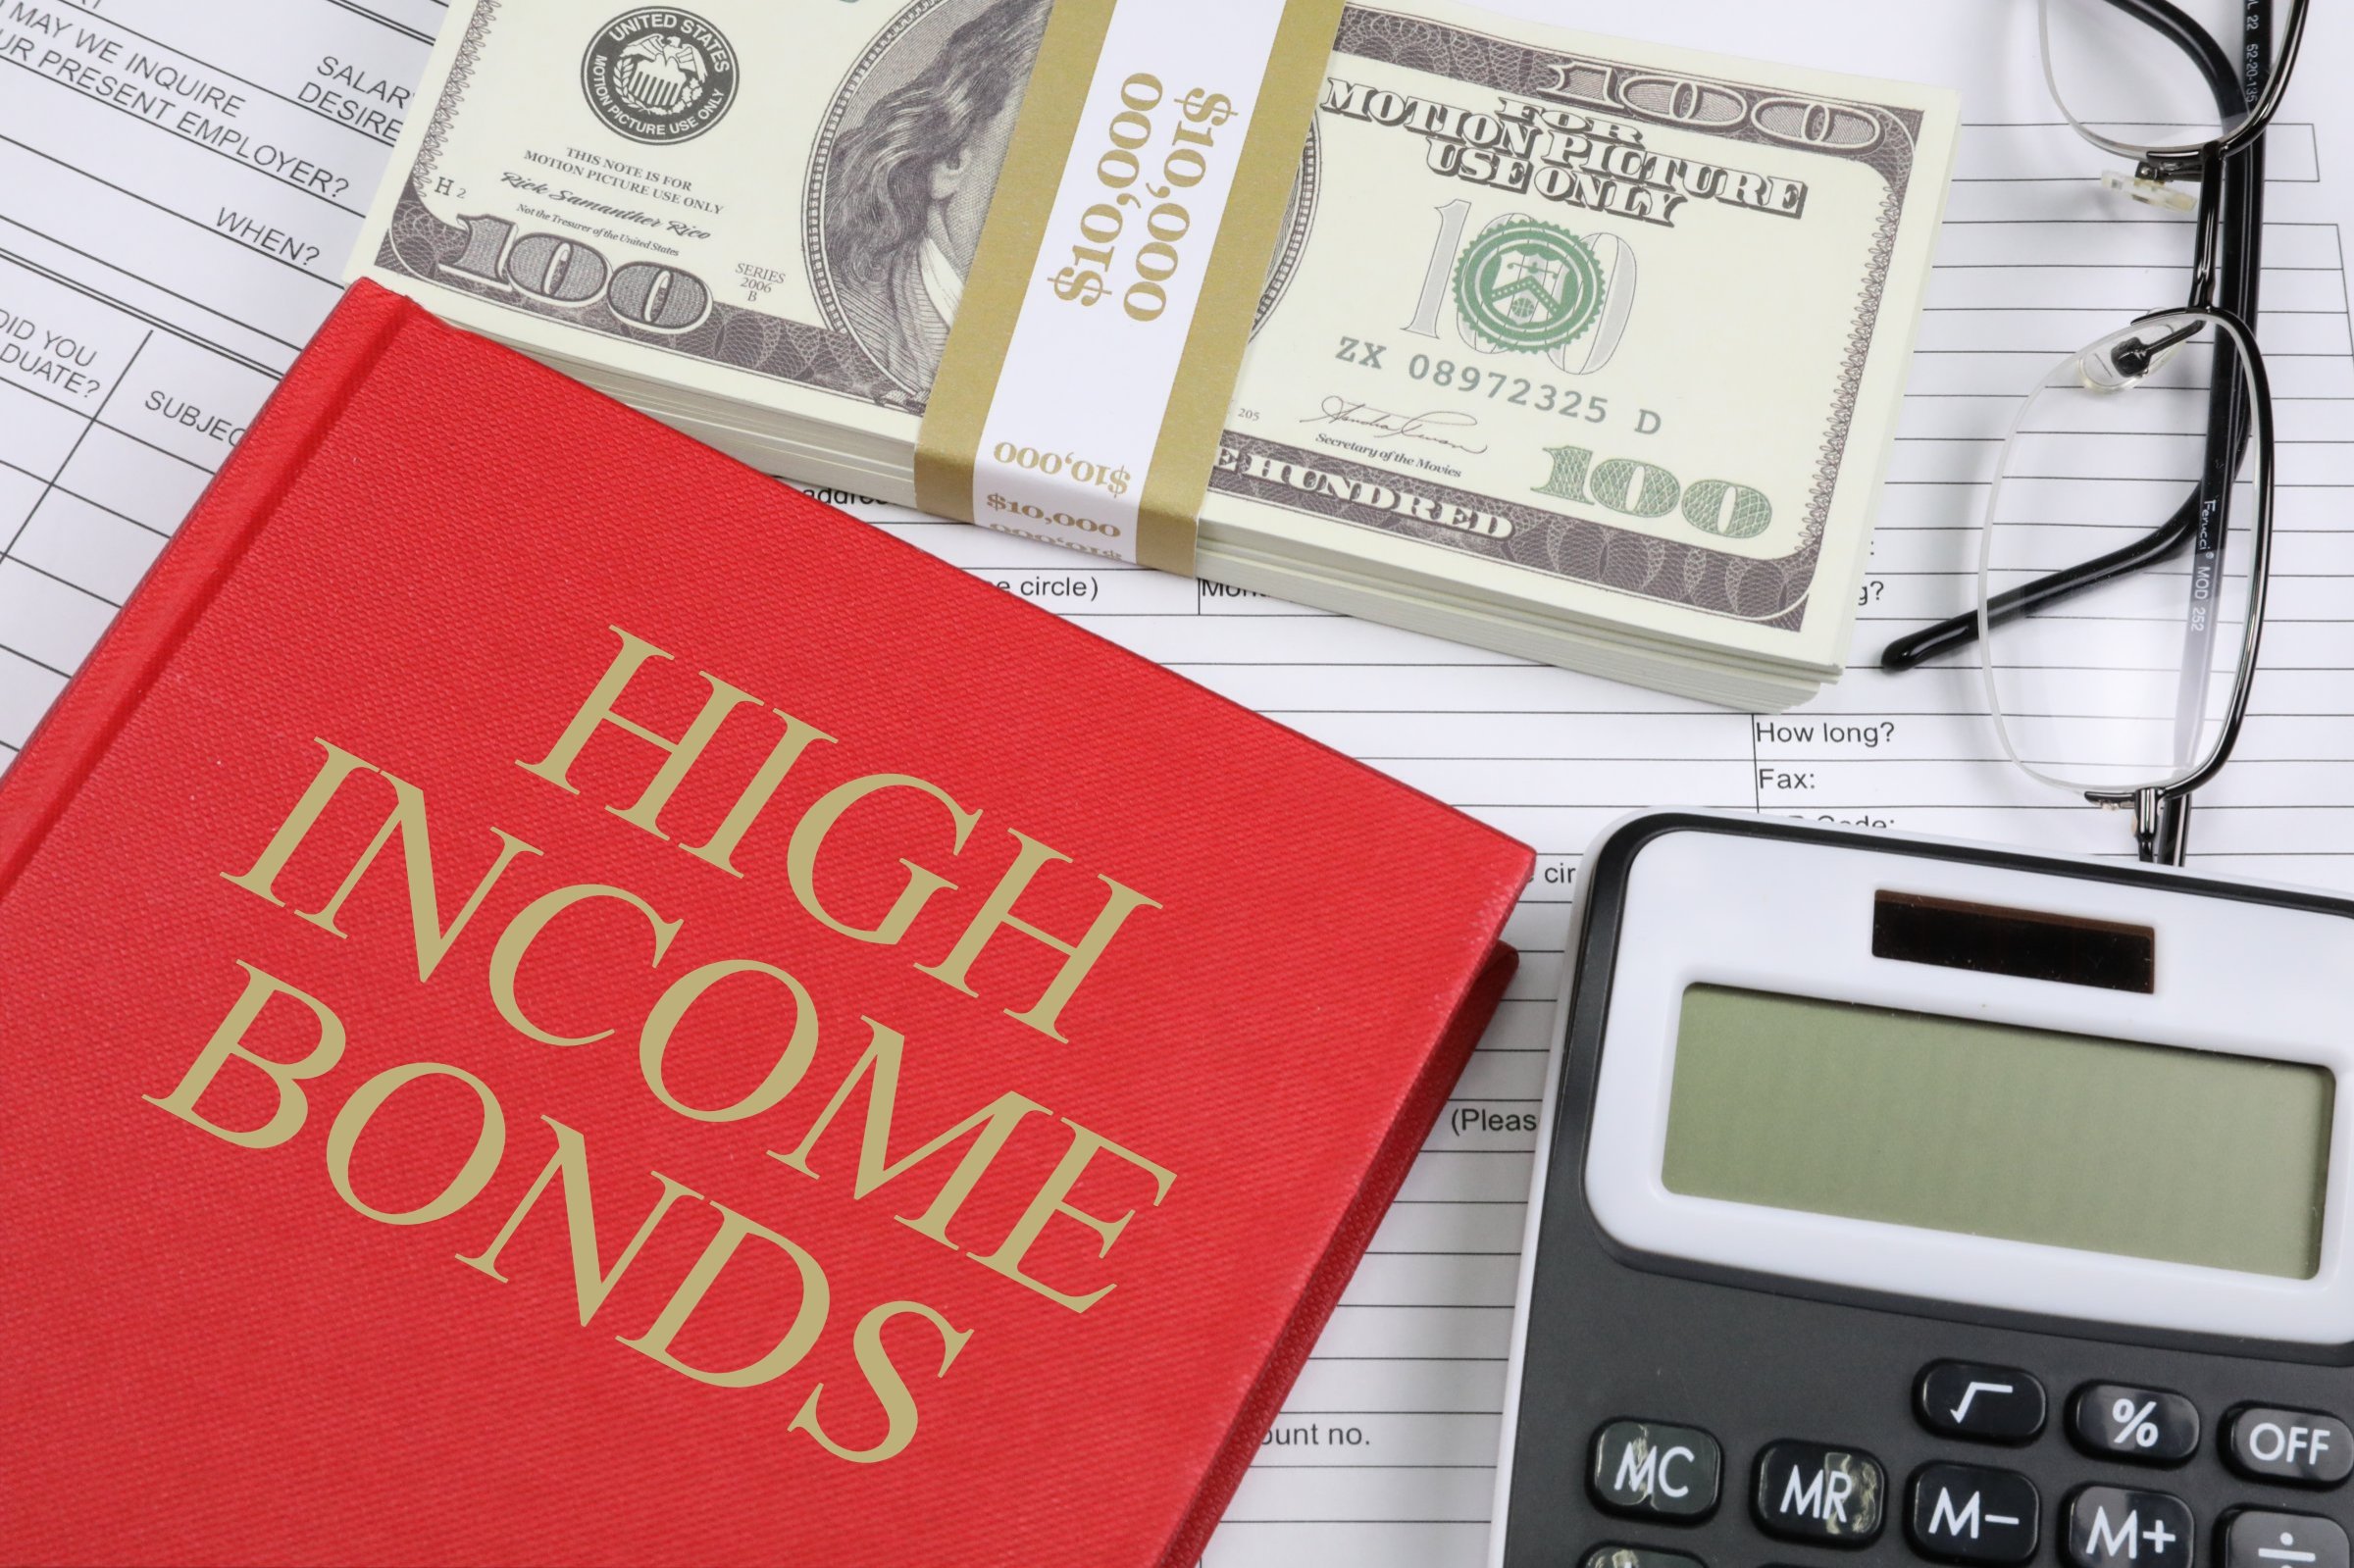 high income bonds